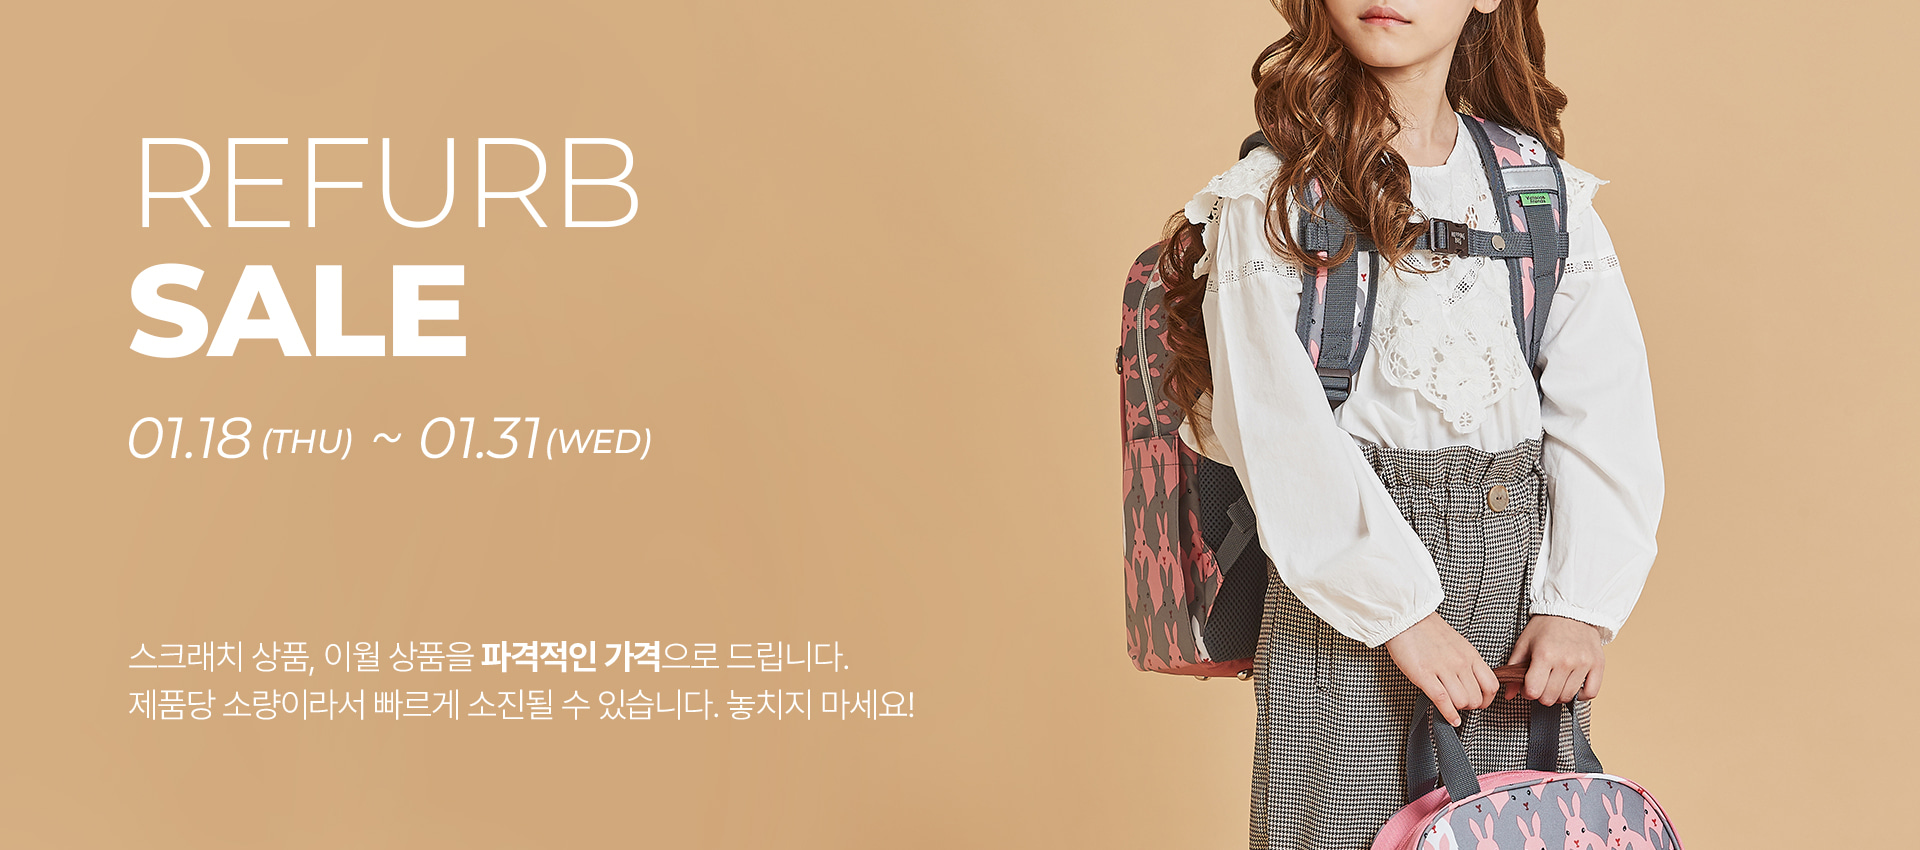 special & refurb sale 스페셜 세일 가격할인 소량 이월상품 스크래치상품